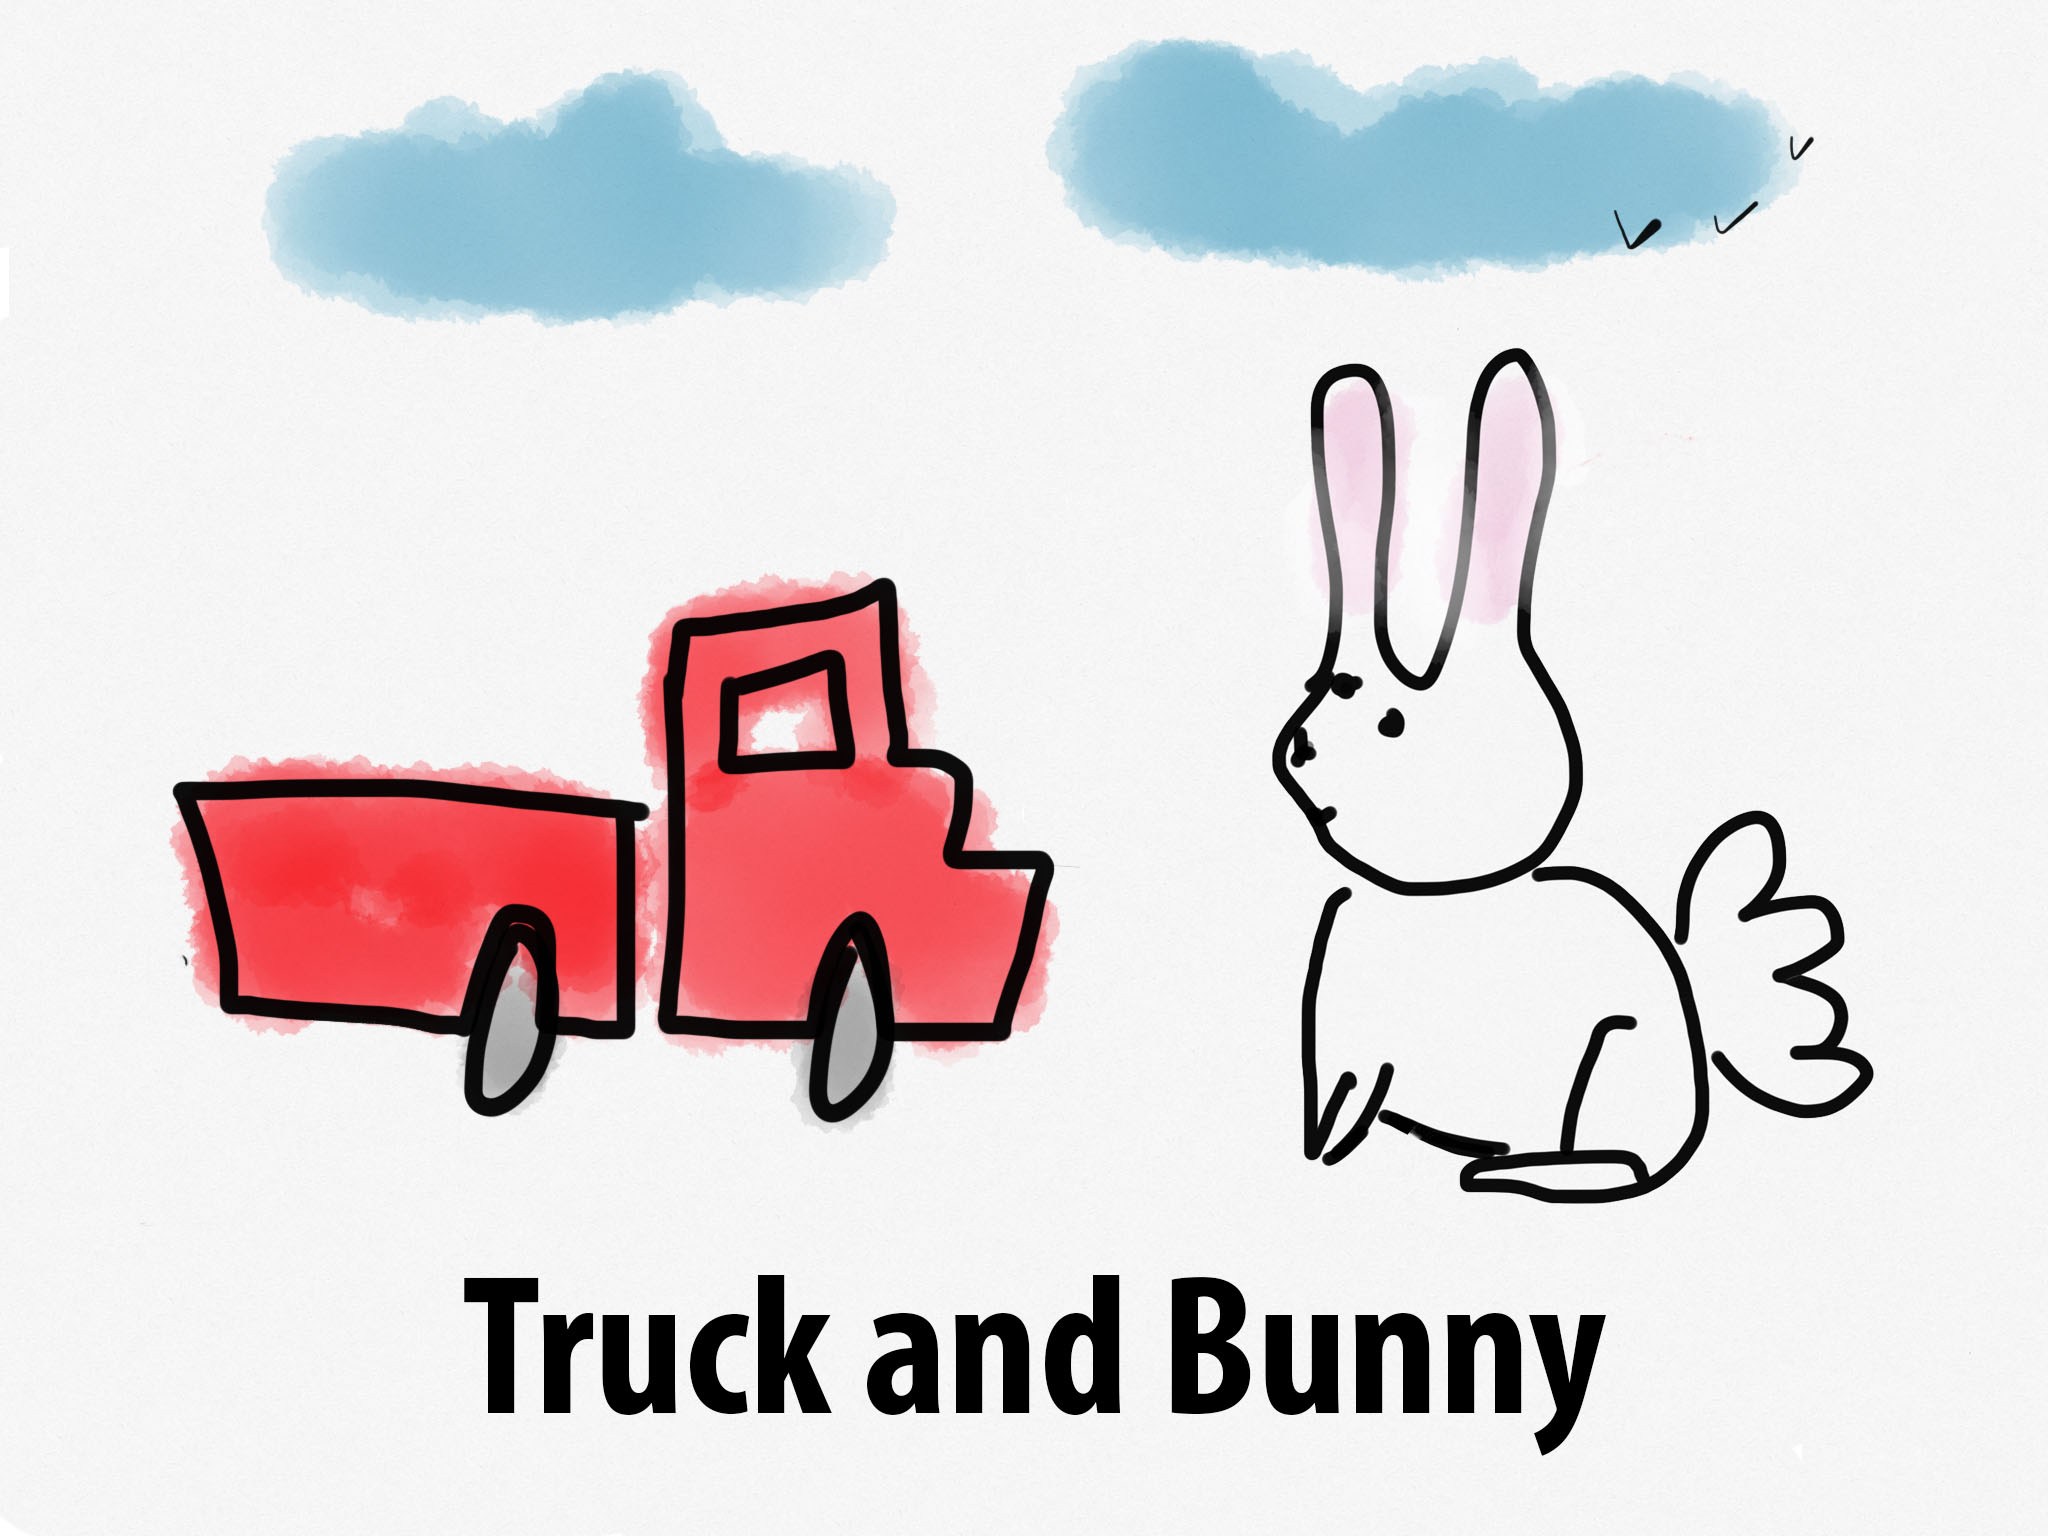 Truck and Bunny by Stephanie Mackley, 2016